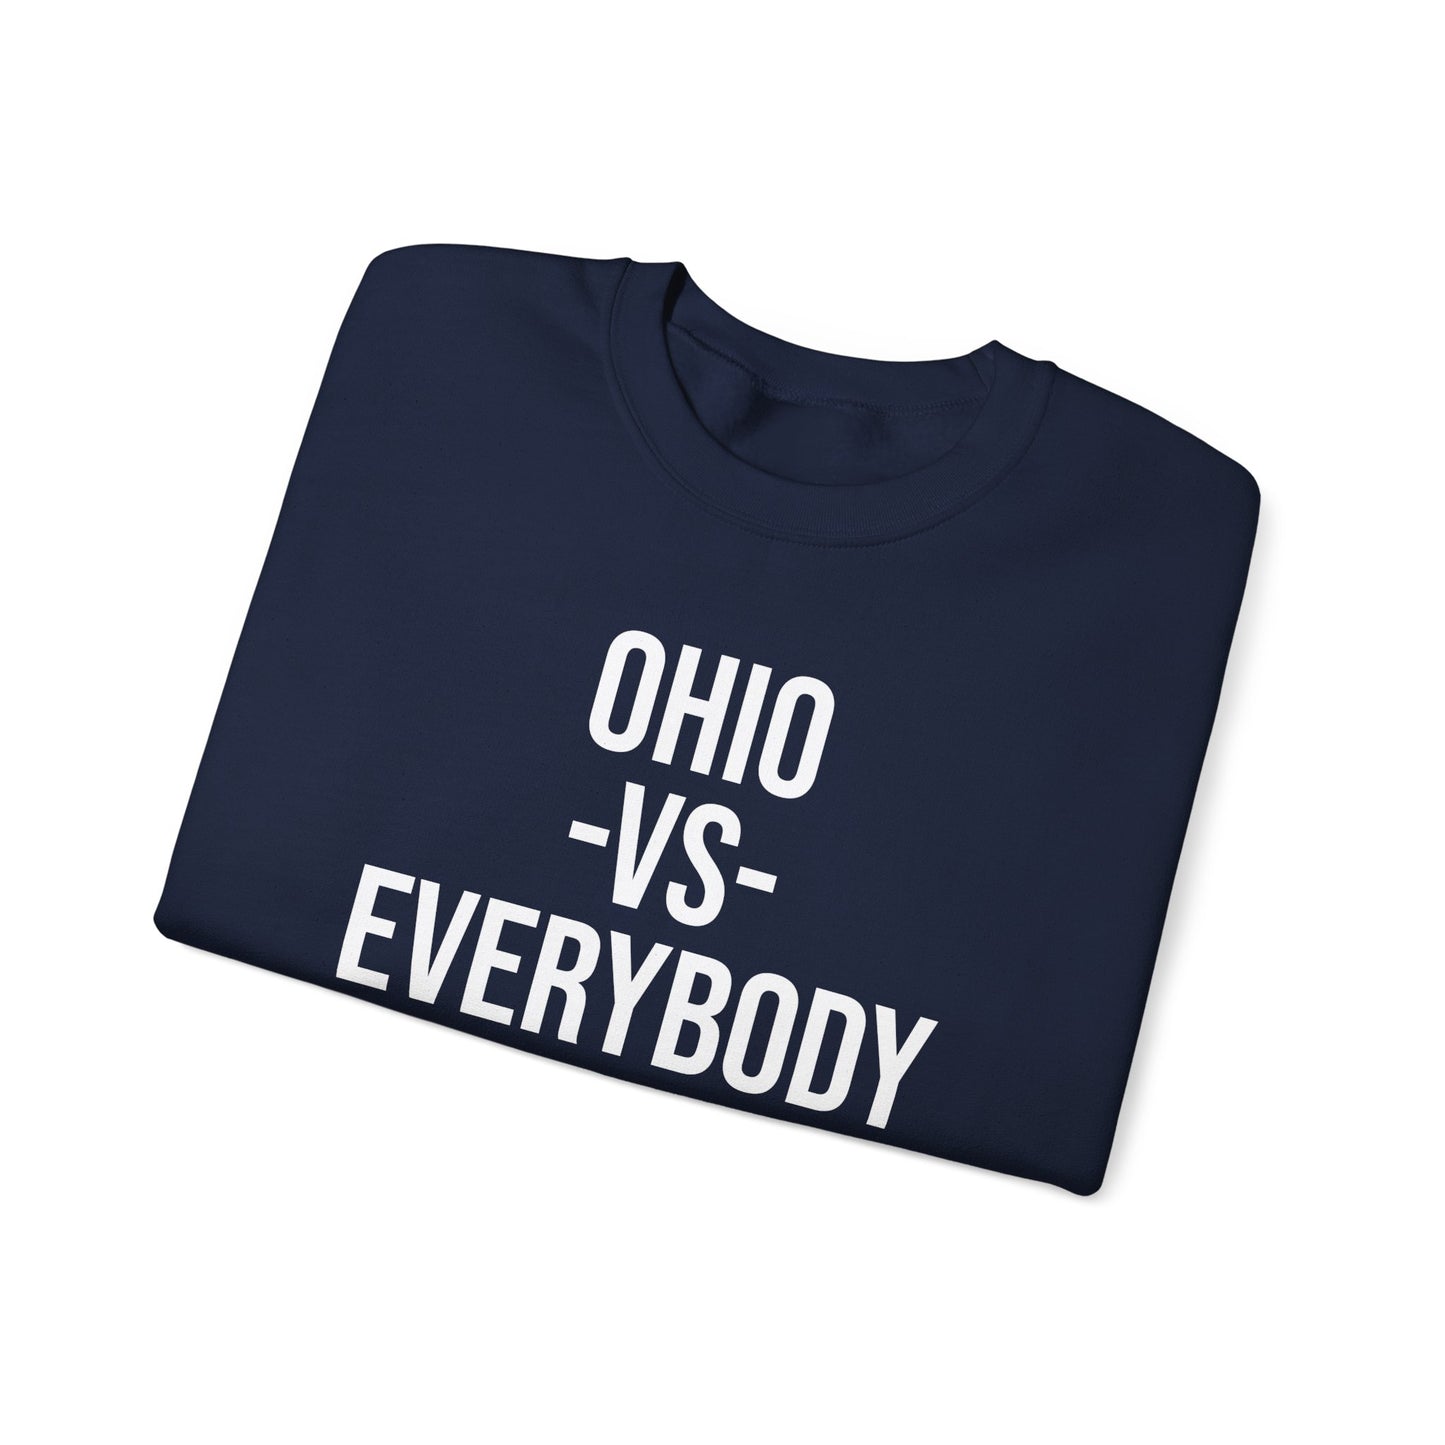 Ohio  -VS - Everybody Unisex Heavy Blend™ Crewneck Sweatshirt